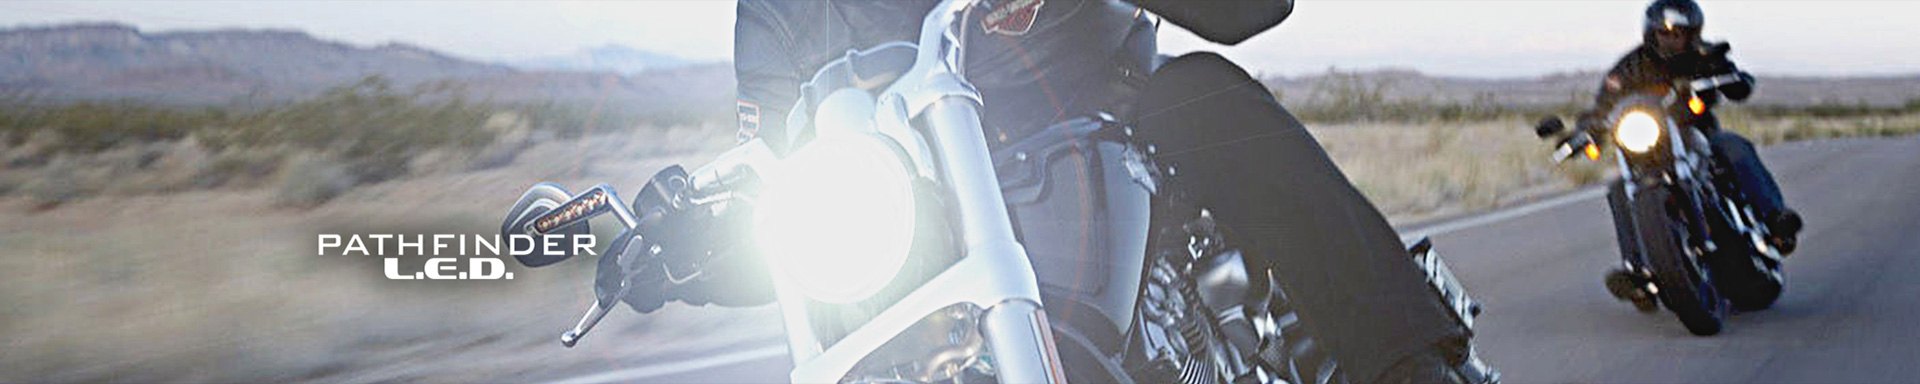 Pathfinder LED Motorcycle Headlights